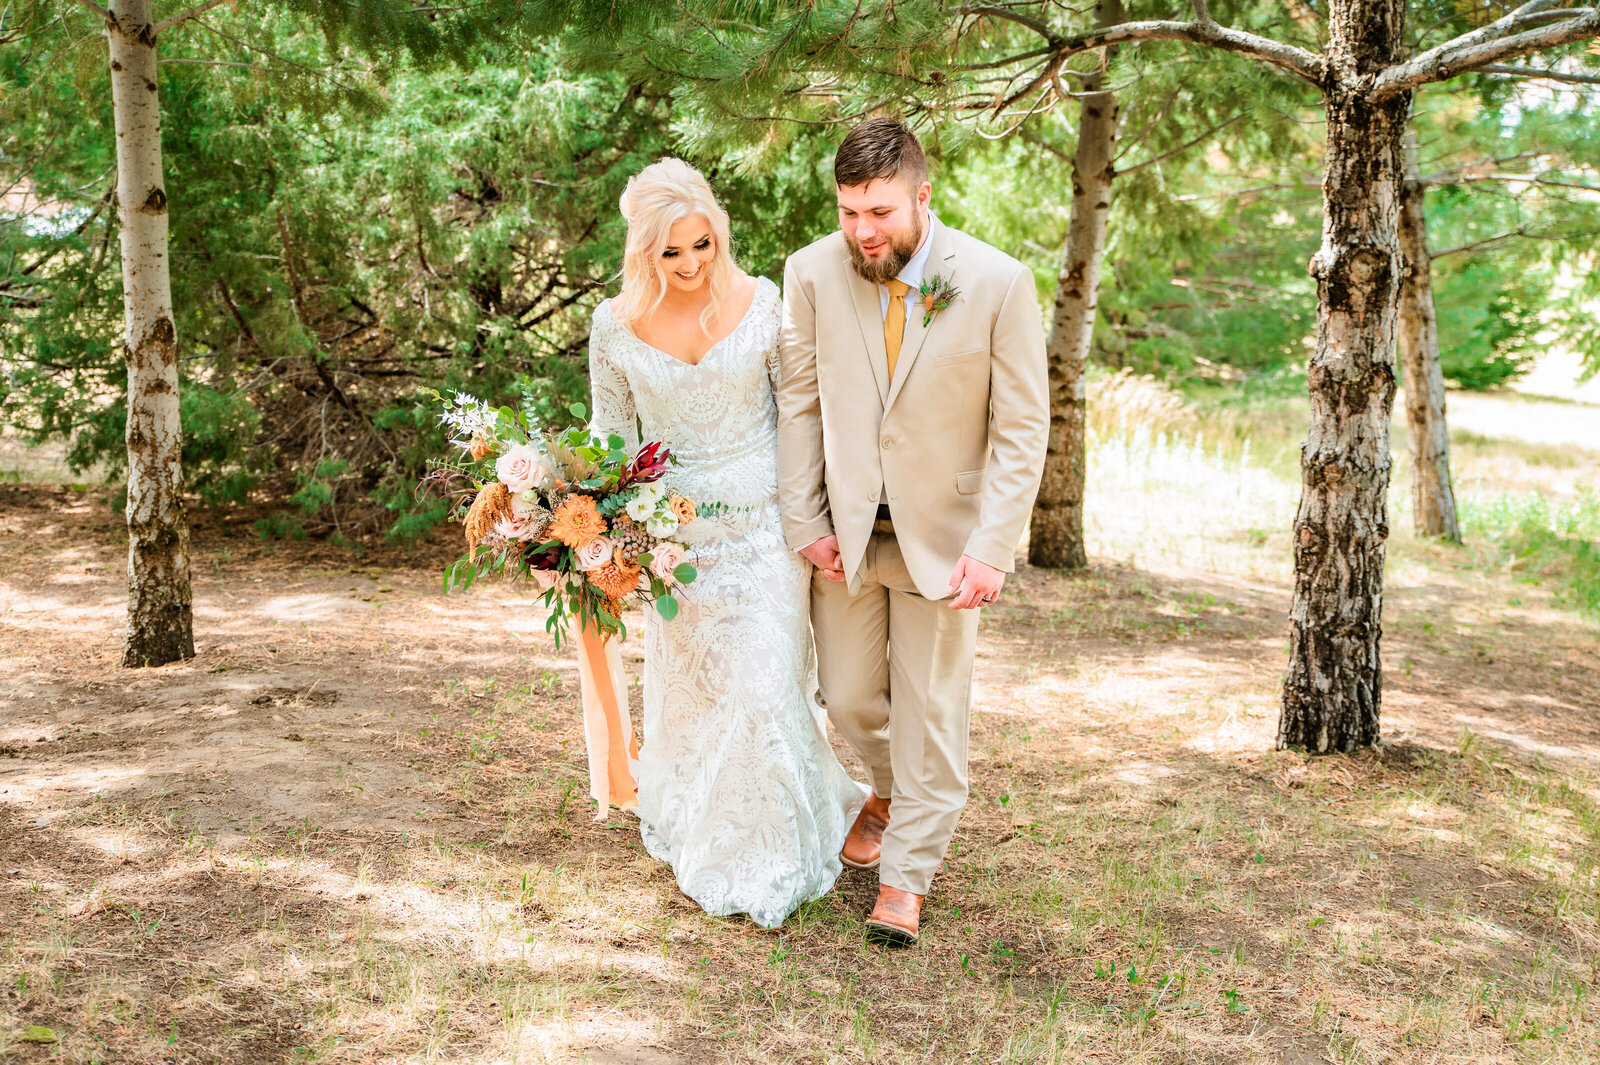 Jackson Hole photographers capture bride and groom walking together after Grand Teton wedding